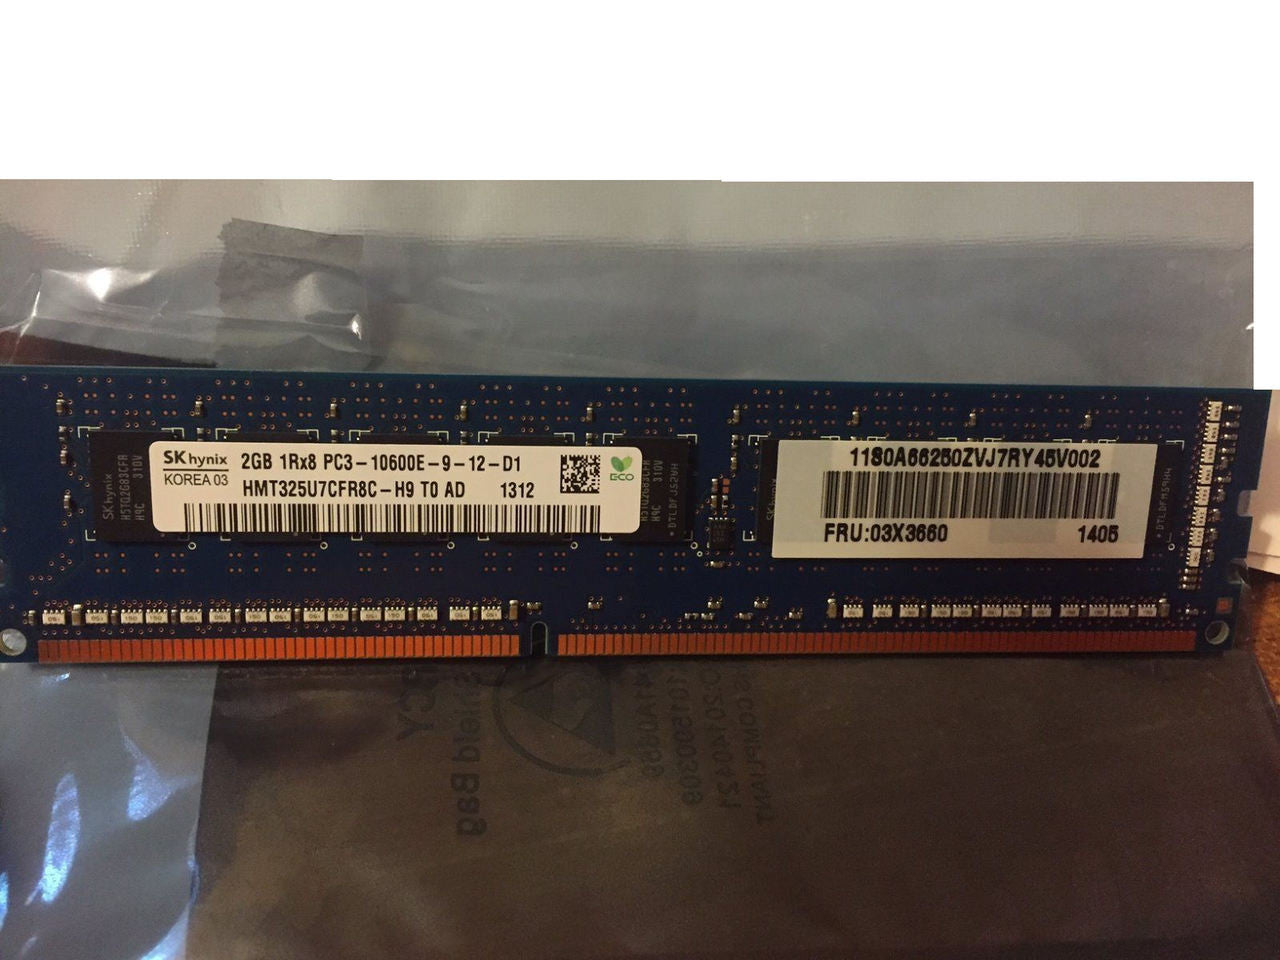 Lenovo ThinkServer RS140 1RX8 PC3-10600E ECC-UDIMM DDR3-1333 2GBIT 2GB